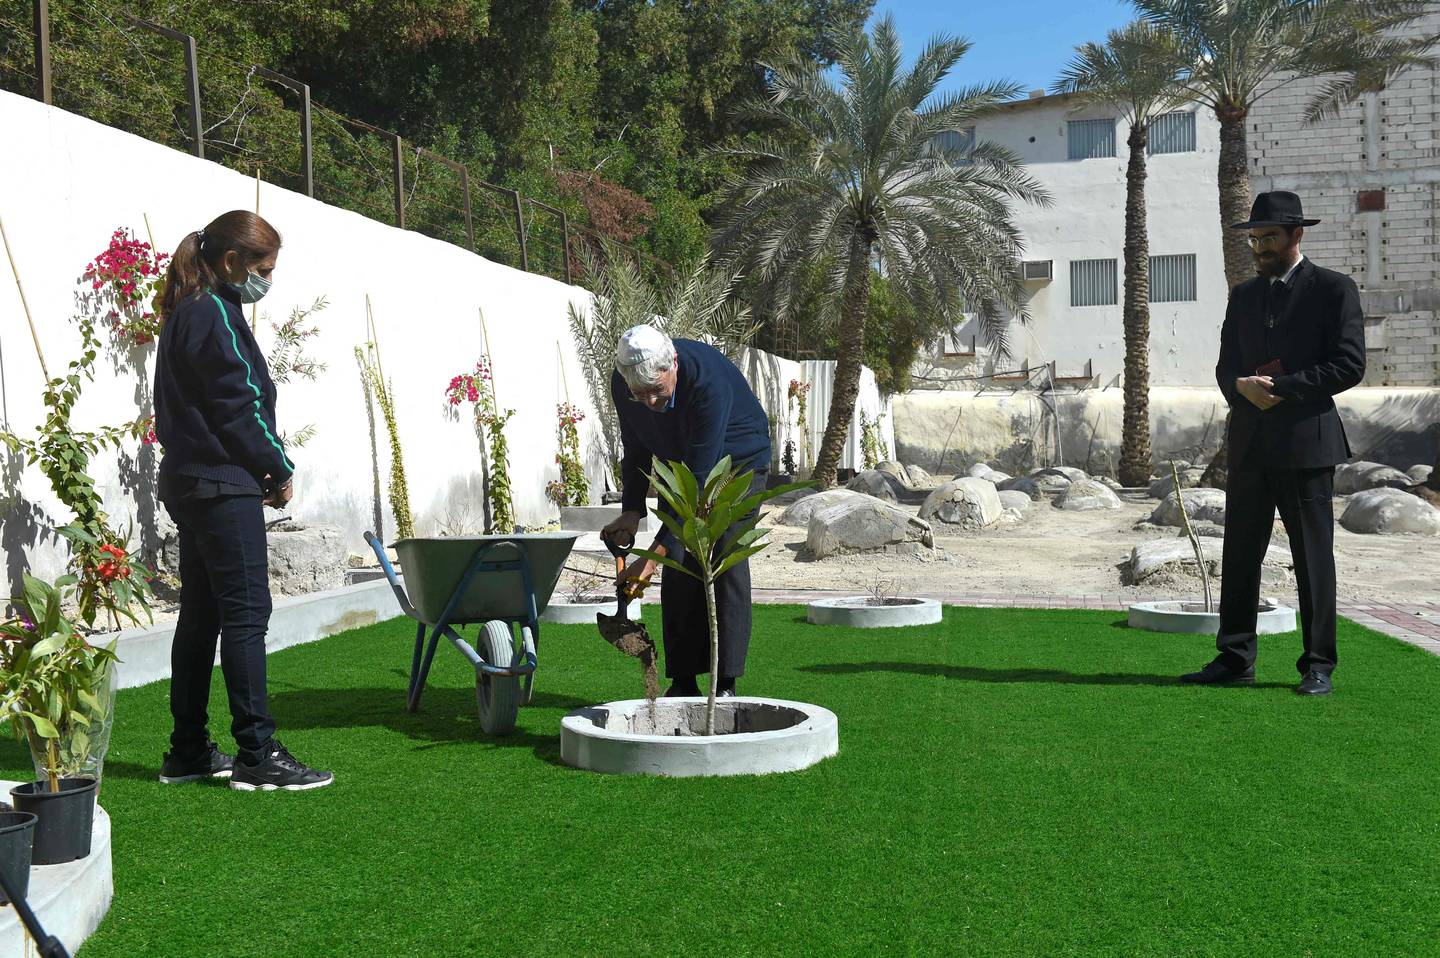 Ebrahim Nonoo, centre, head of the Jewish community in Bahrain, plants a tree as Rabbi Yaacov Phia, right, looks on at the Jewish cemetery in Bahrain's capital Manama, on January 23, 2022.  AFP